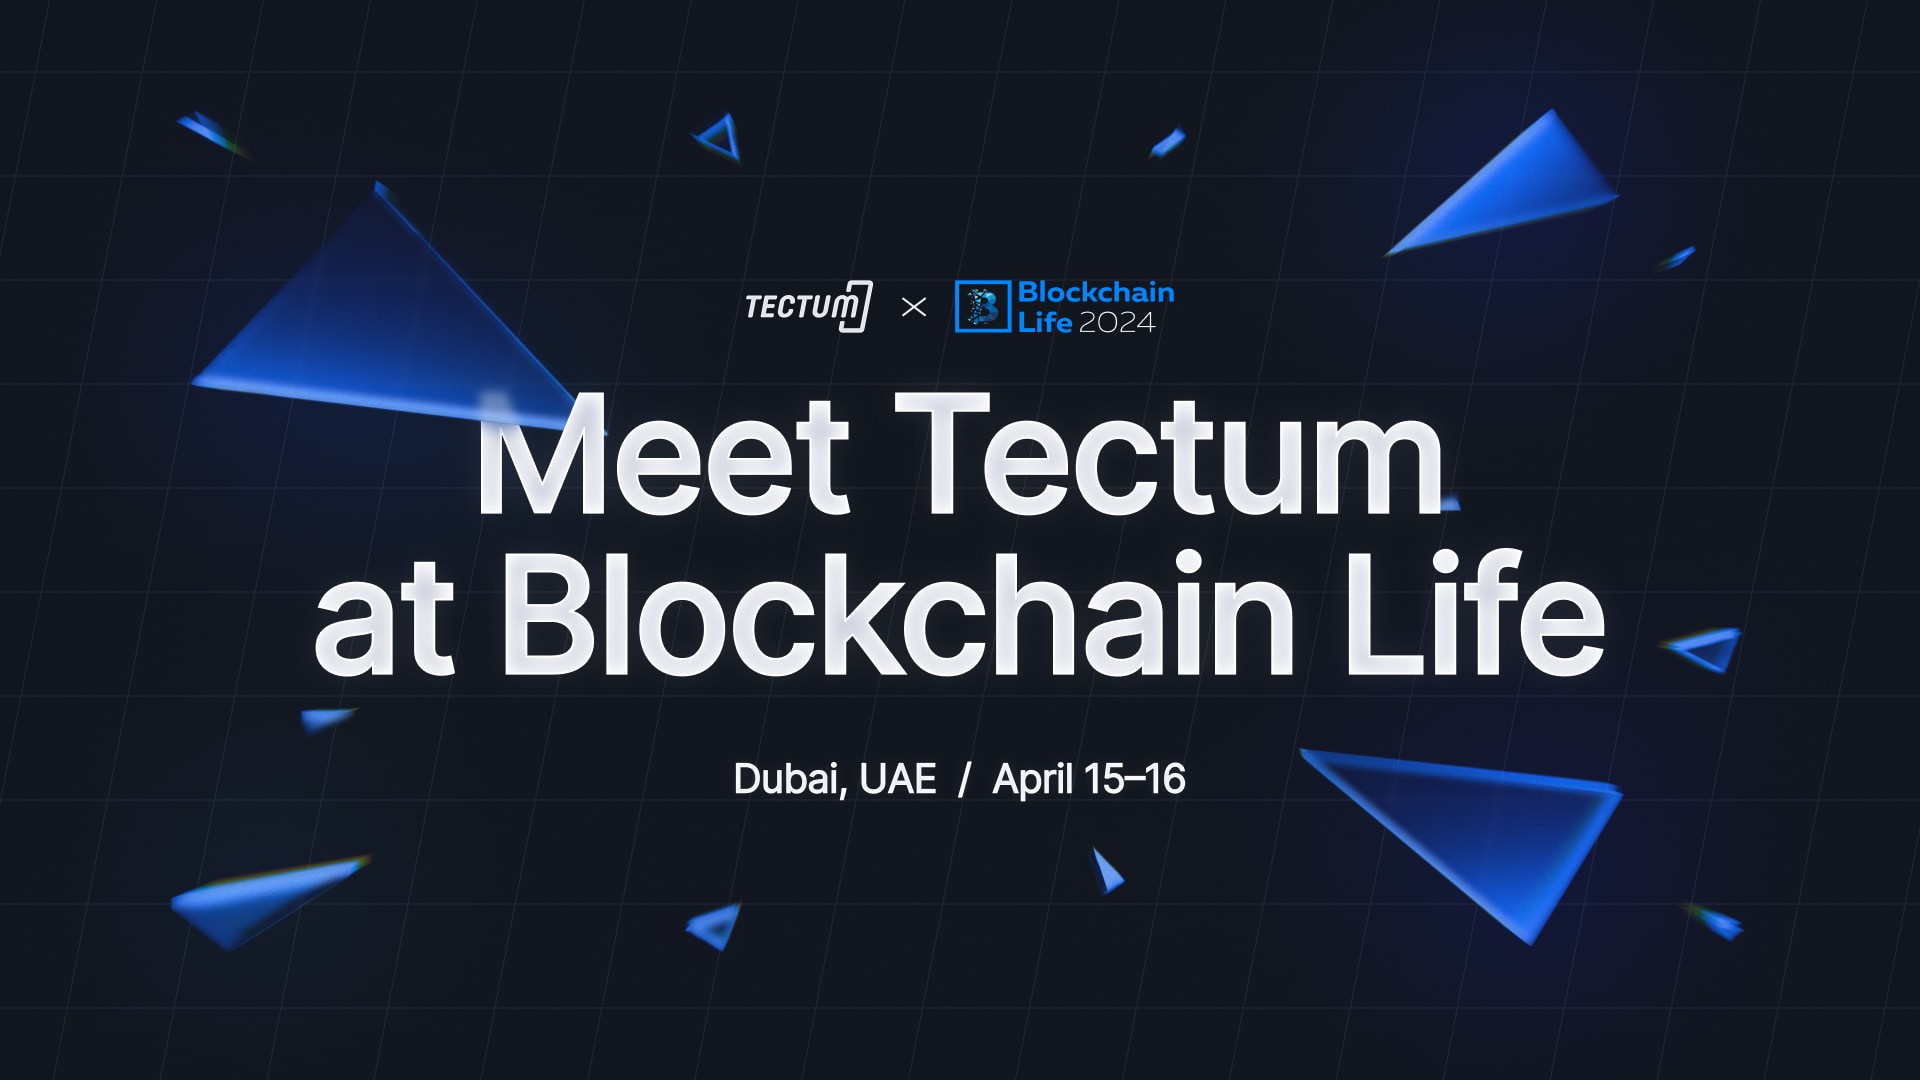 Join Tectum at the Blockchain Life Event in Dubai on April 15th